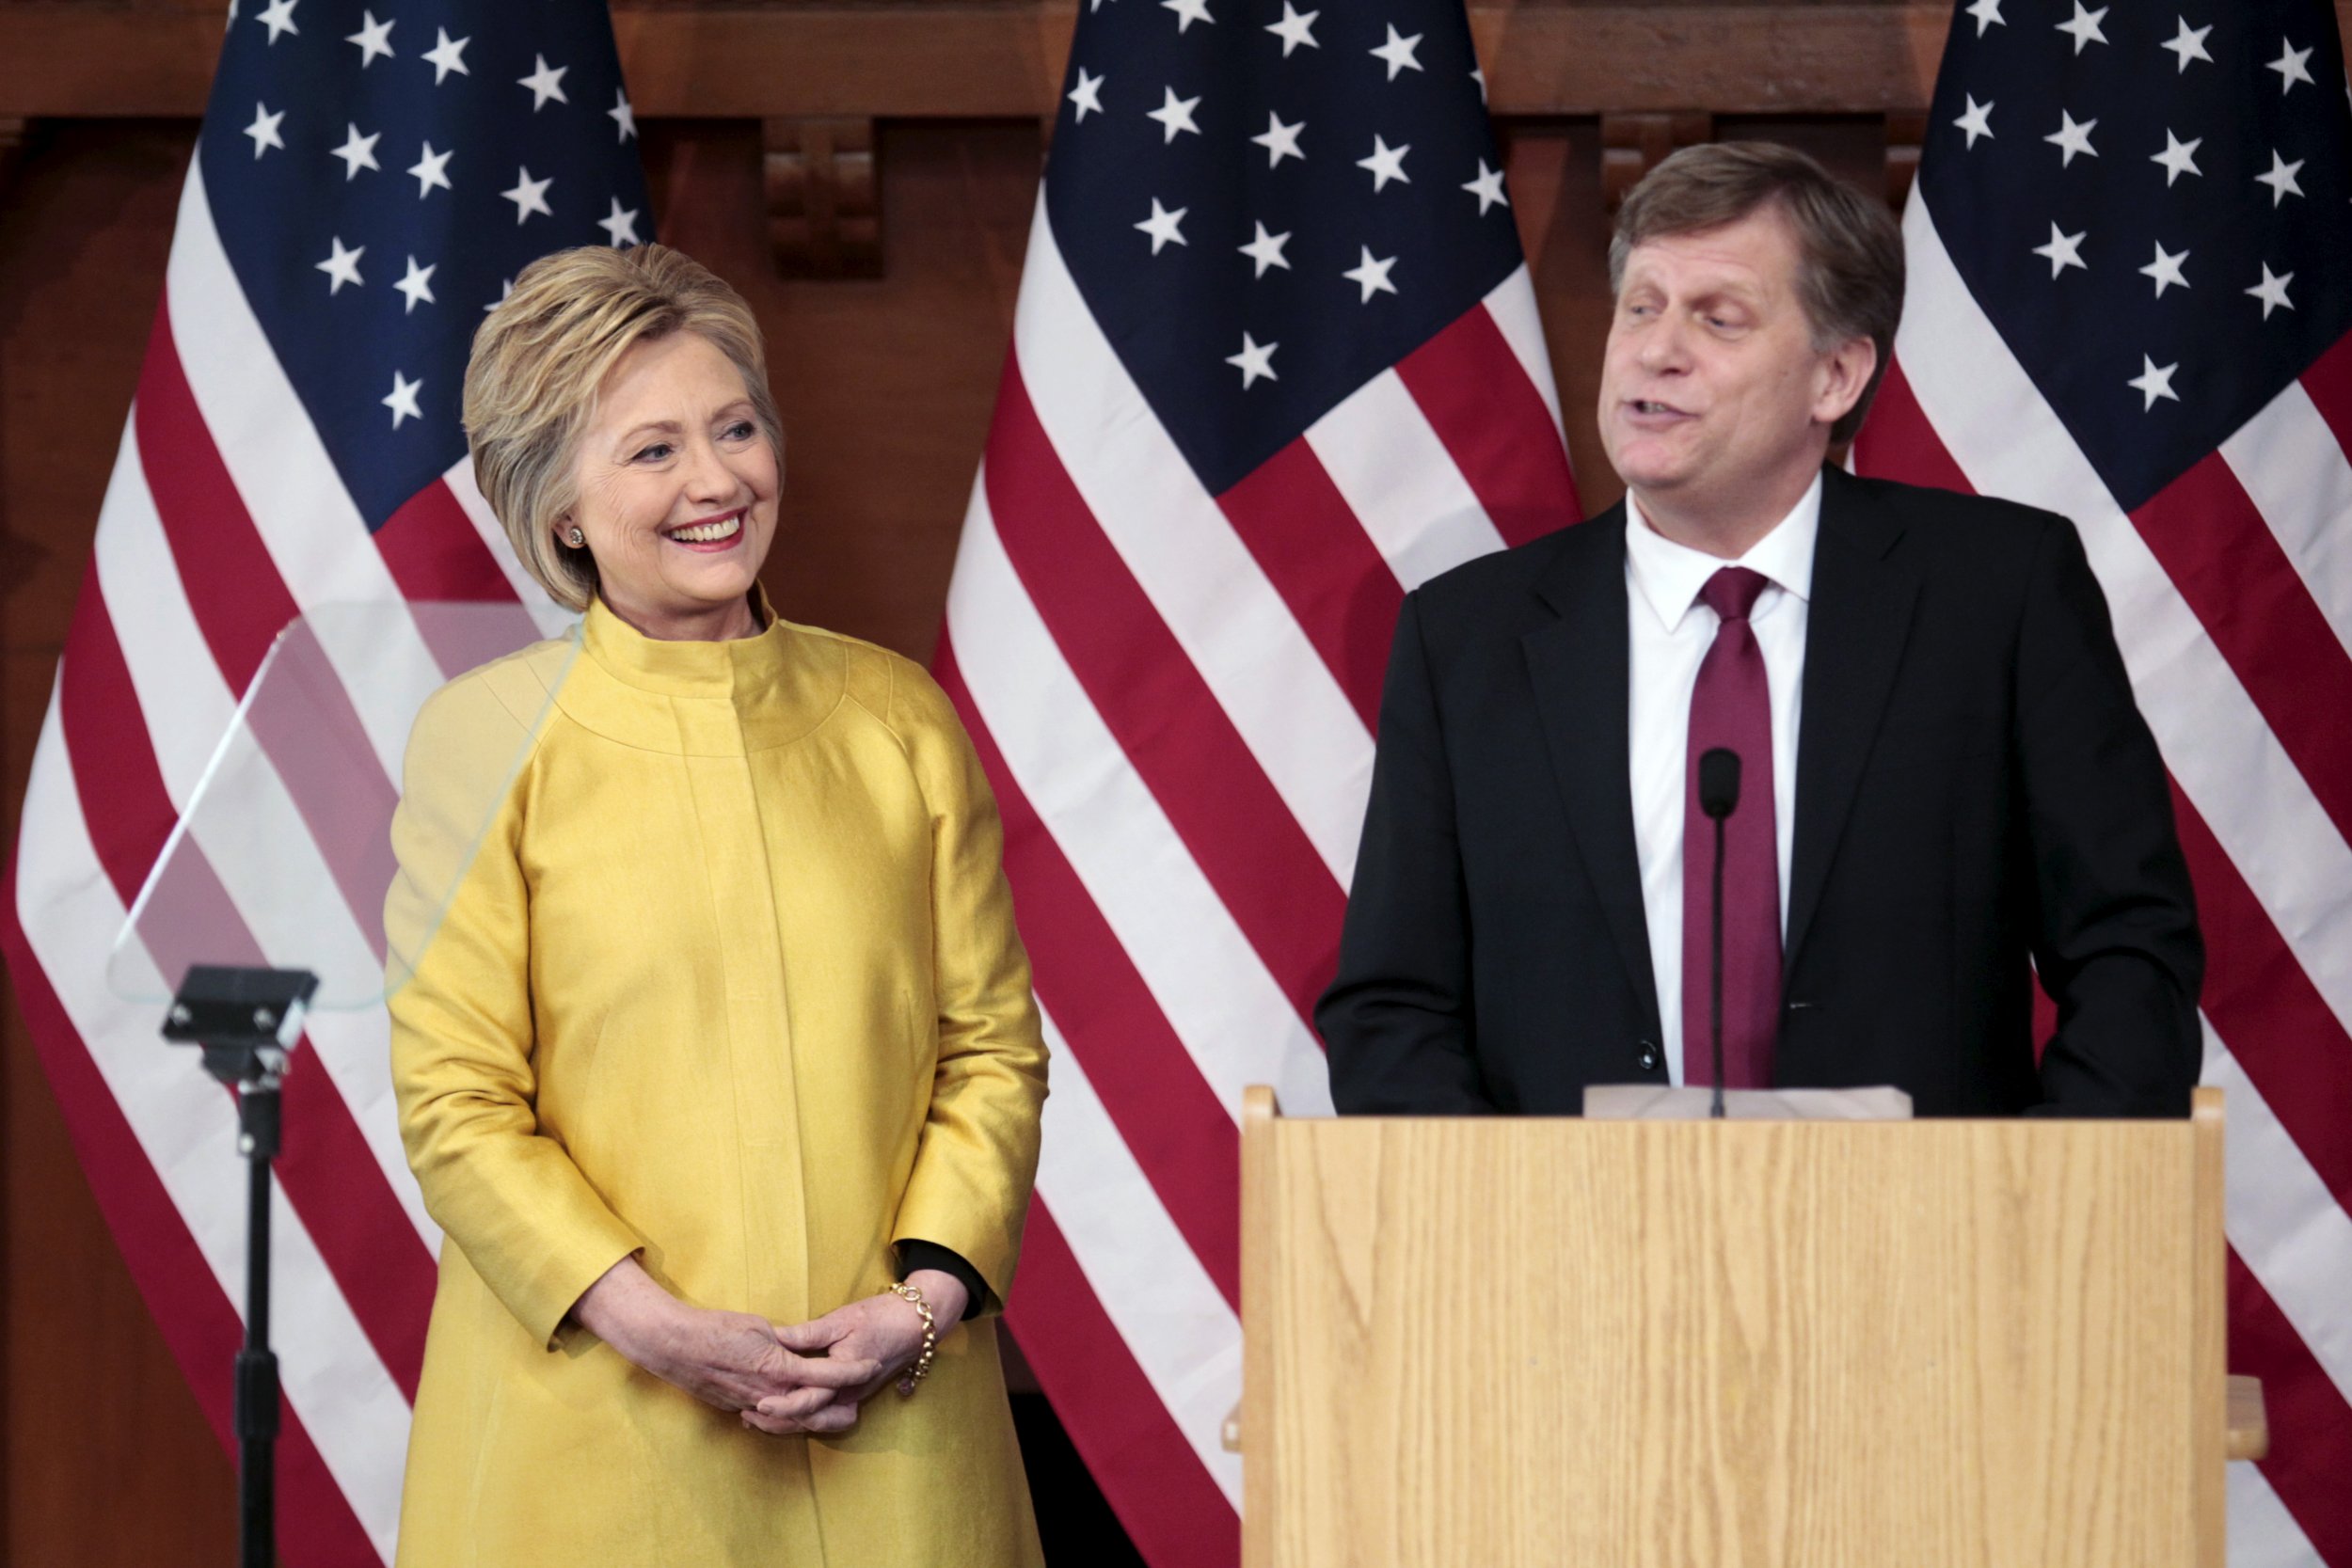 McFaul and Clinton